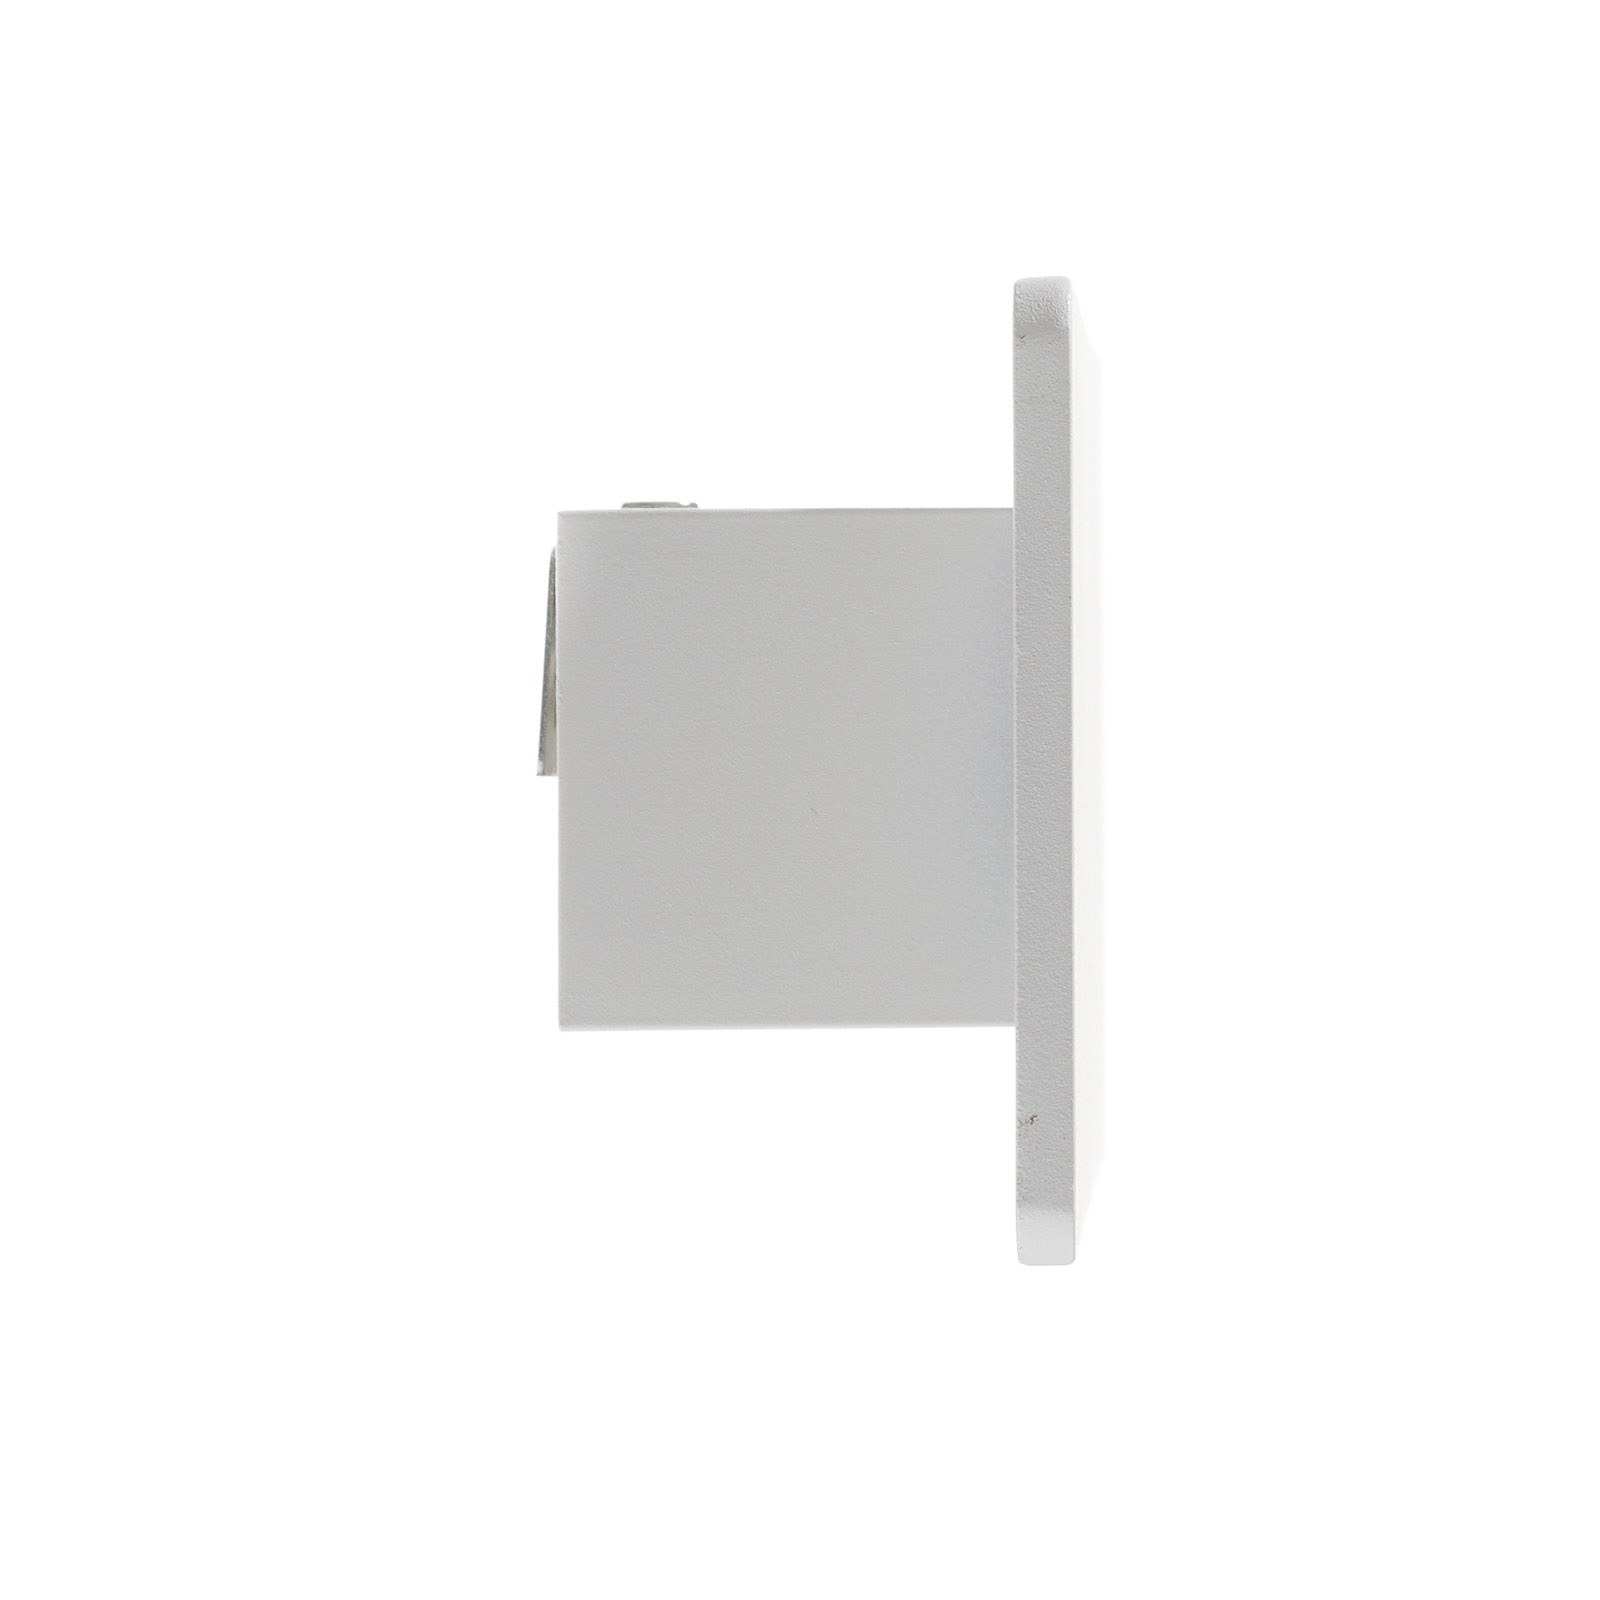 LED stenska svetilka Zig Zag bela, širina 29 cm